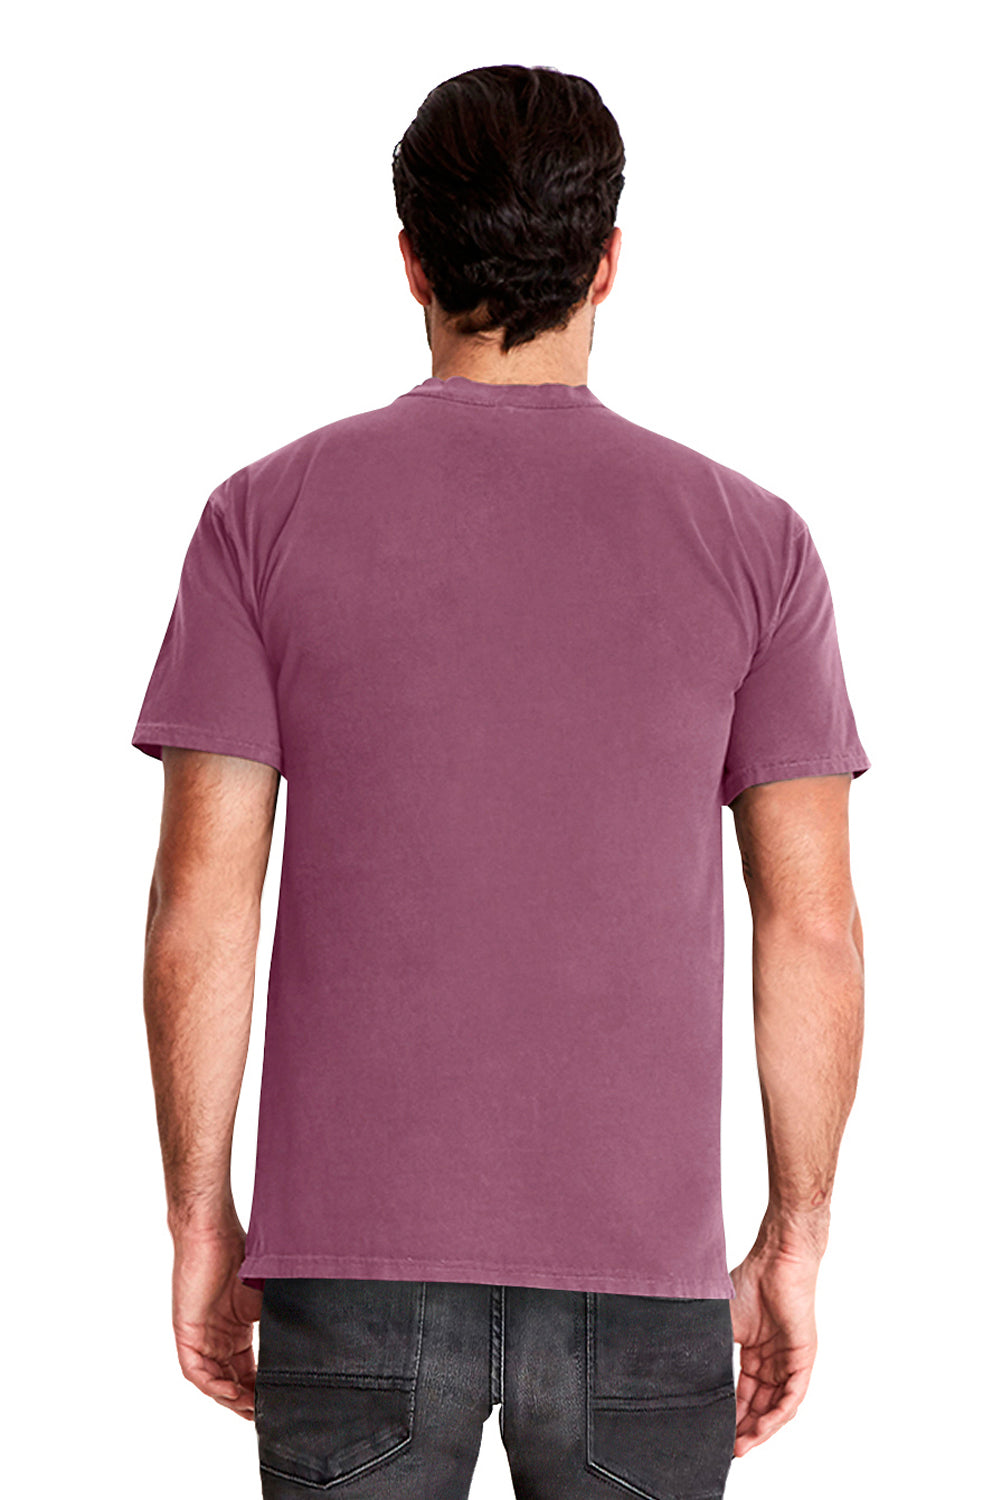 Next Level 7410 Mens Inspired Dye Jersey Short Sleeve Crewneck T-Shirt Shiraz Purple Back